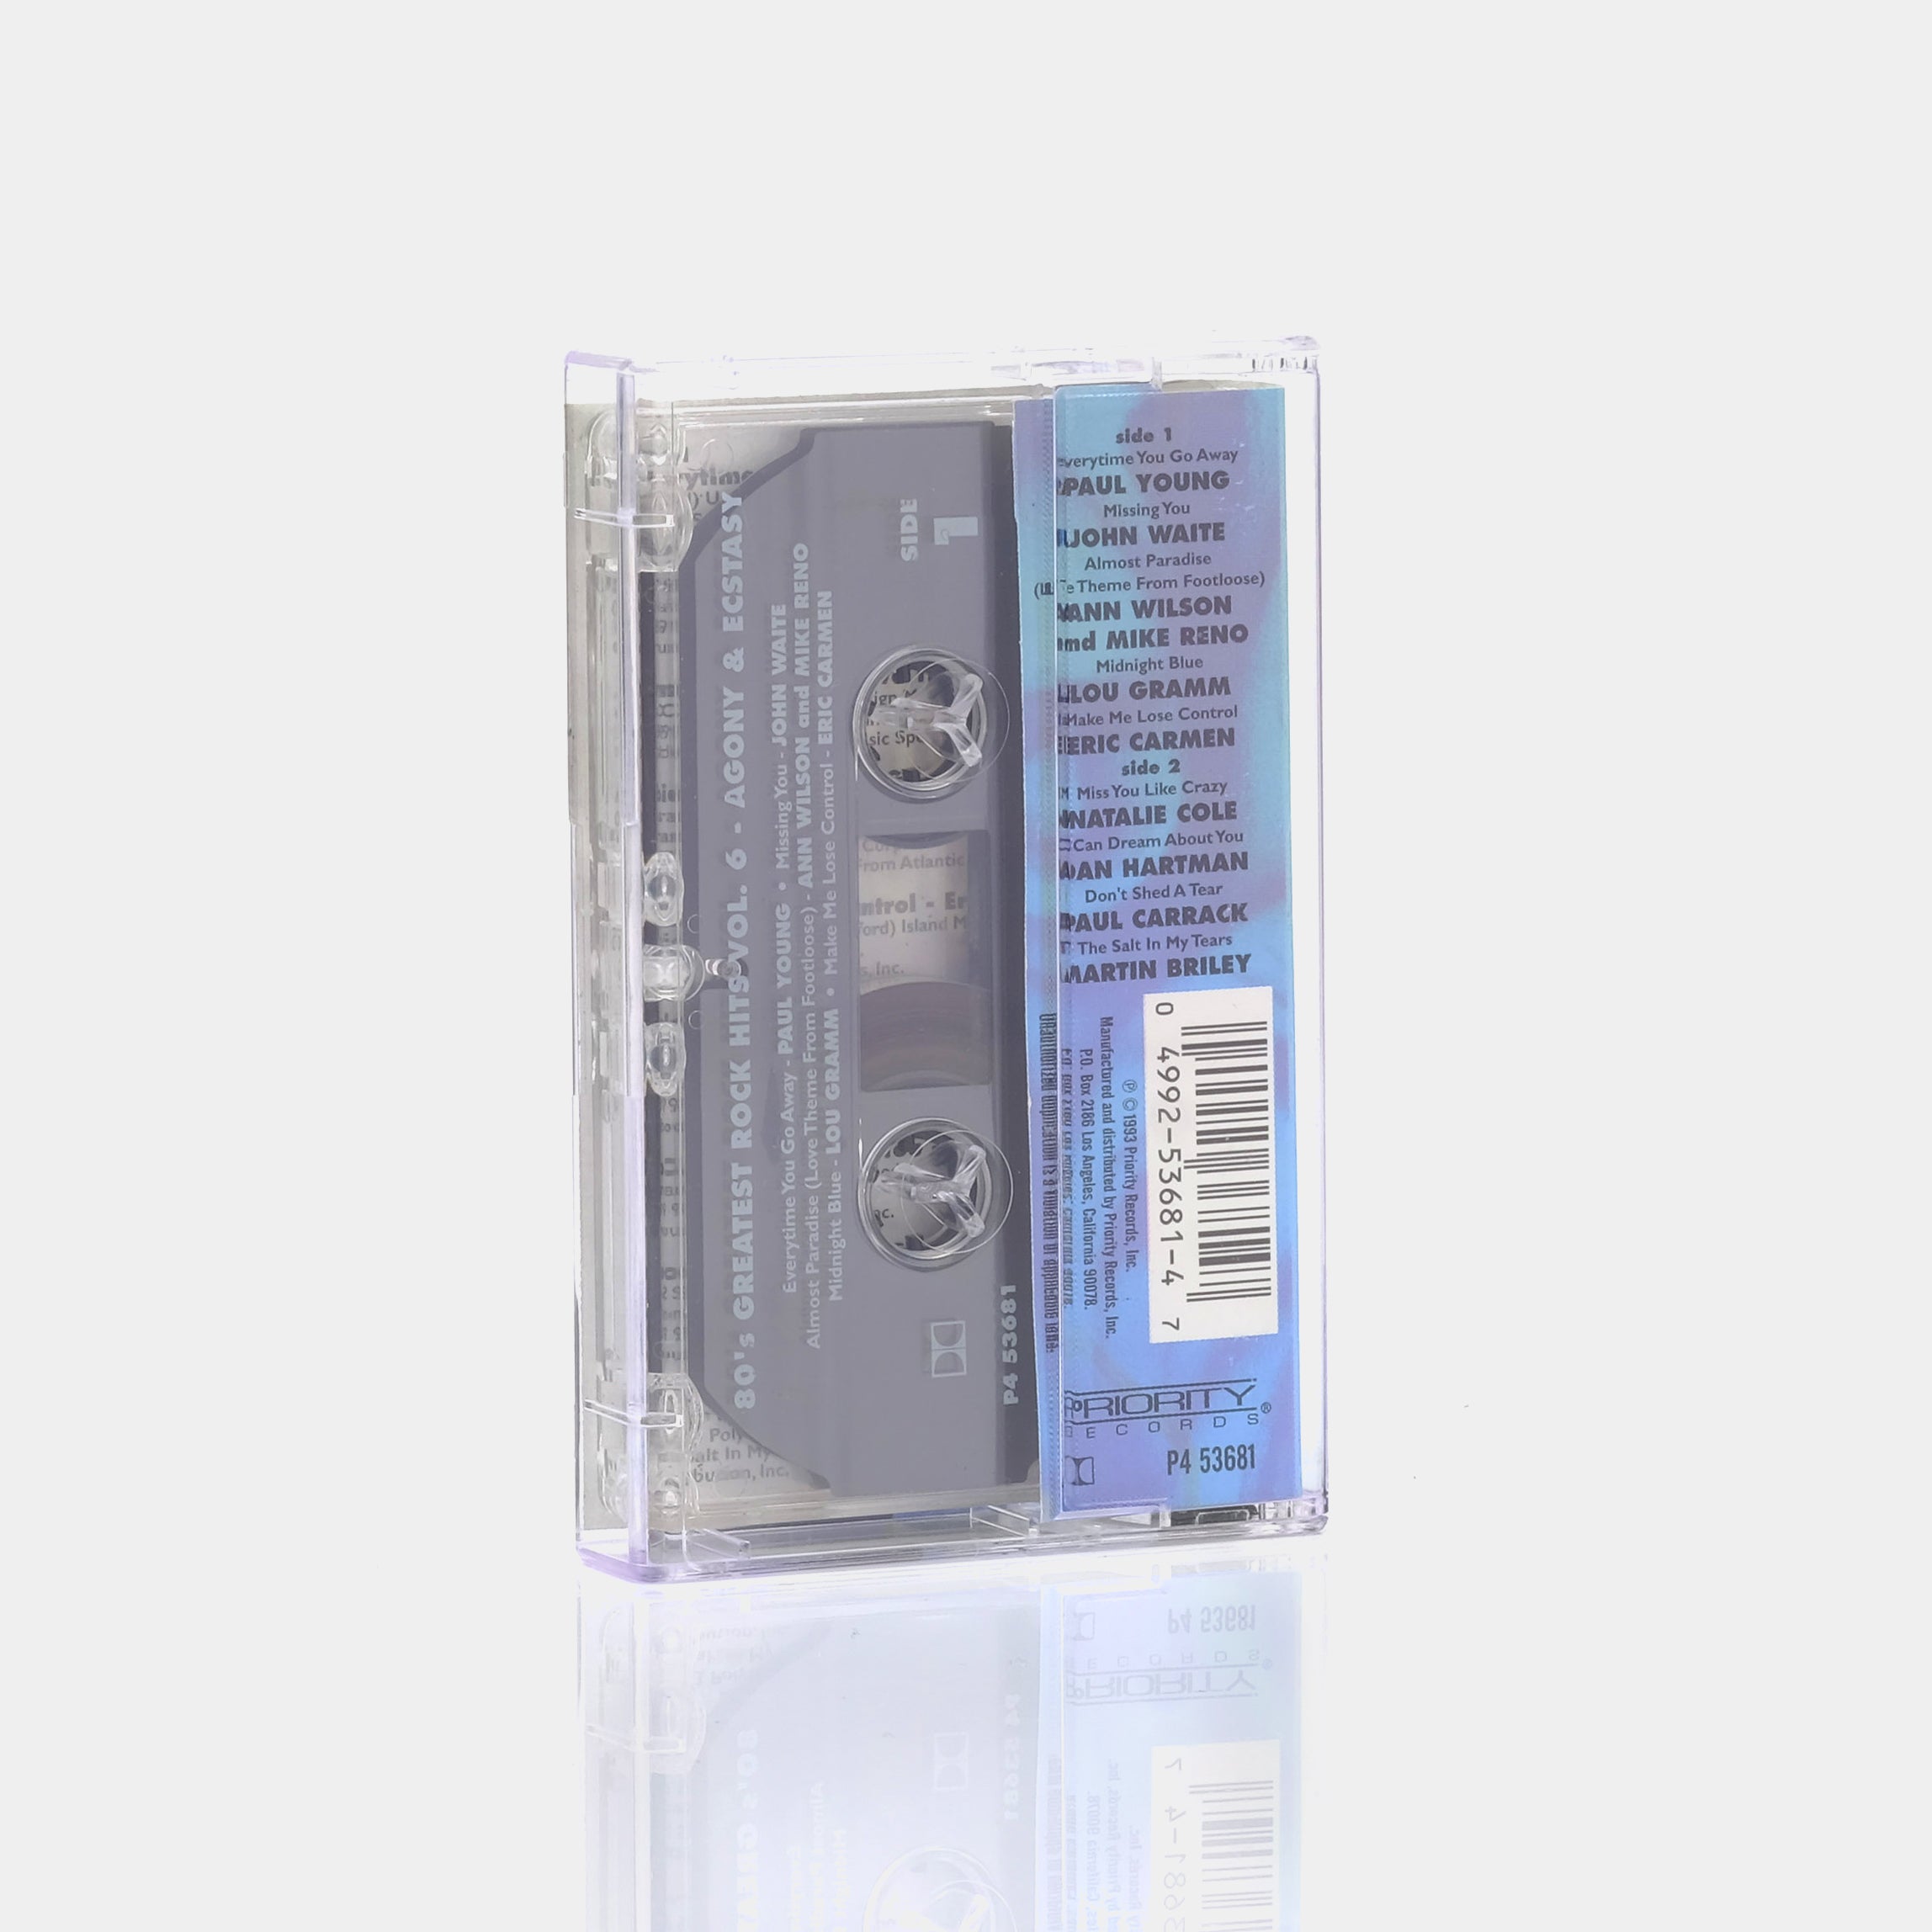 The 80's Greatest Rock Hits Volume 6 Cassette Tape